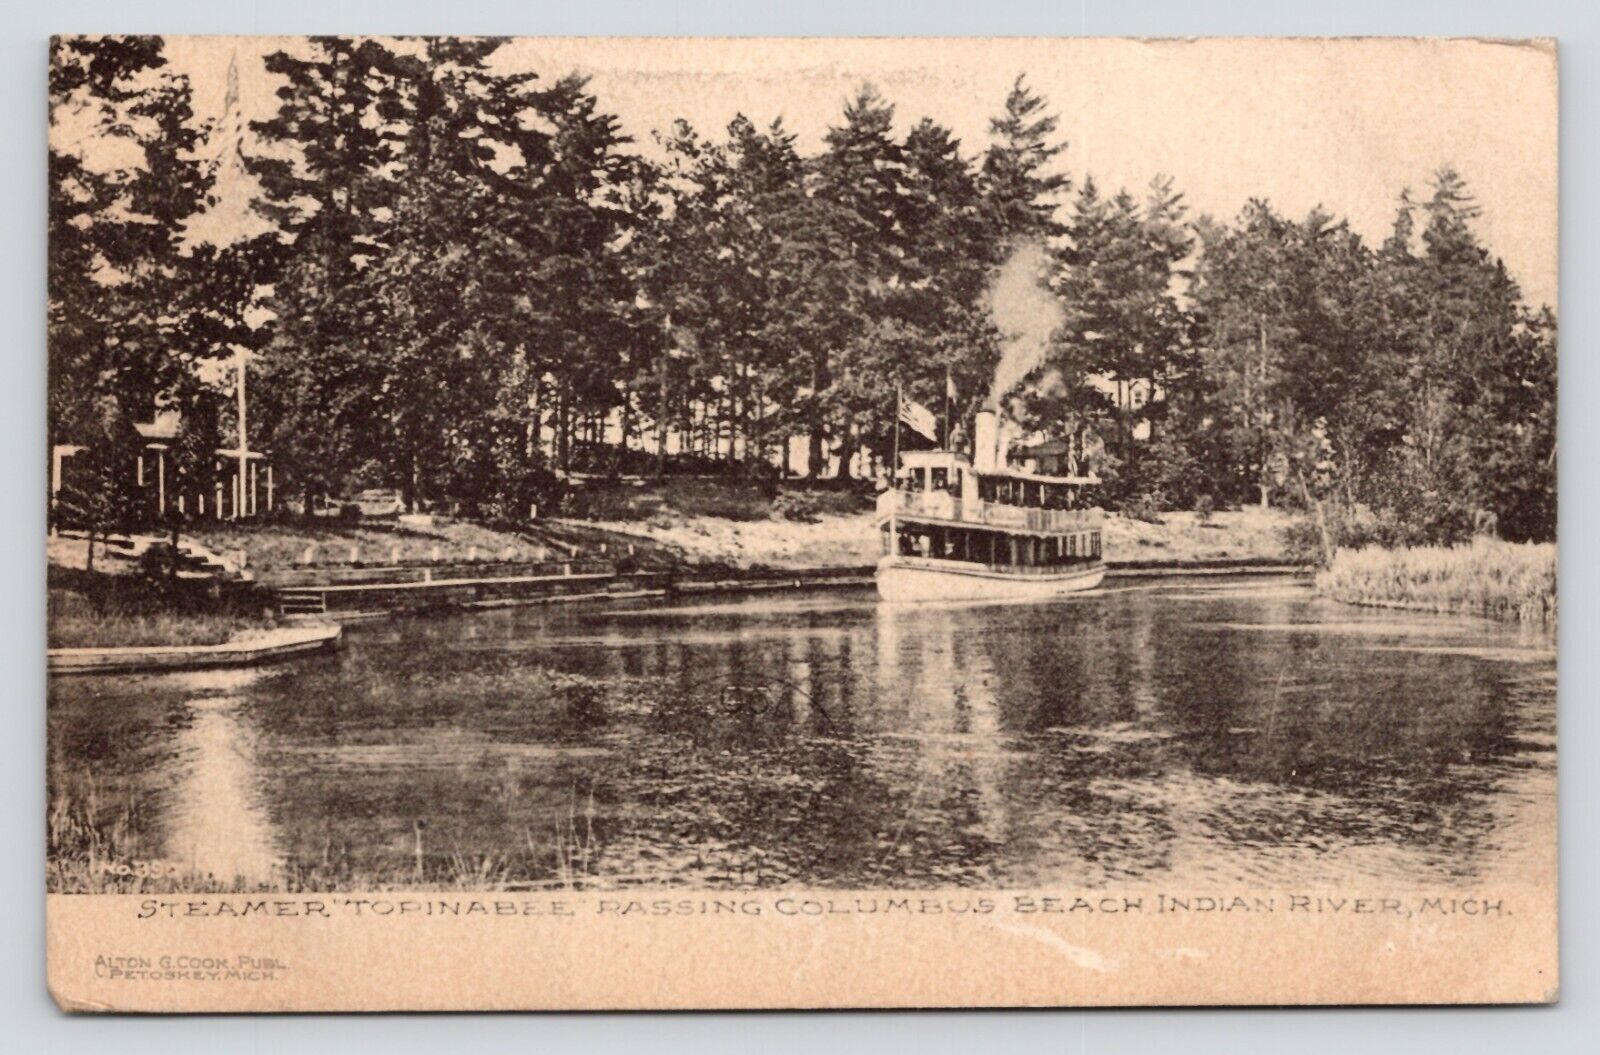 Steamboat Topinabee Columbus Beach Indian River MI Antique DB c1907 Postcard